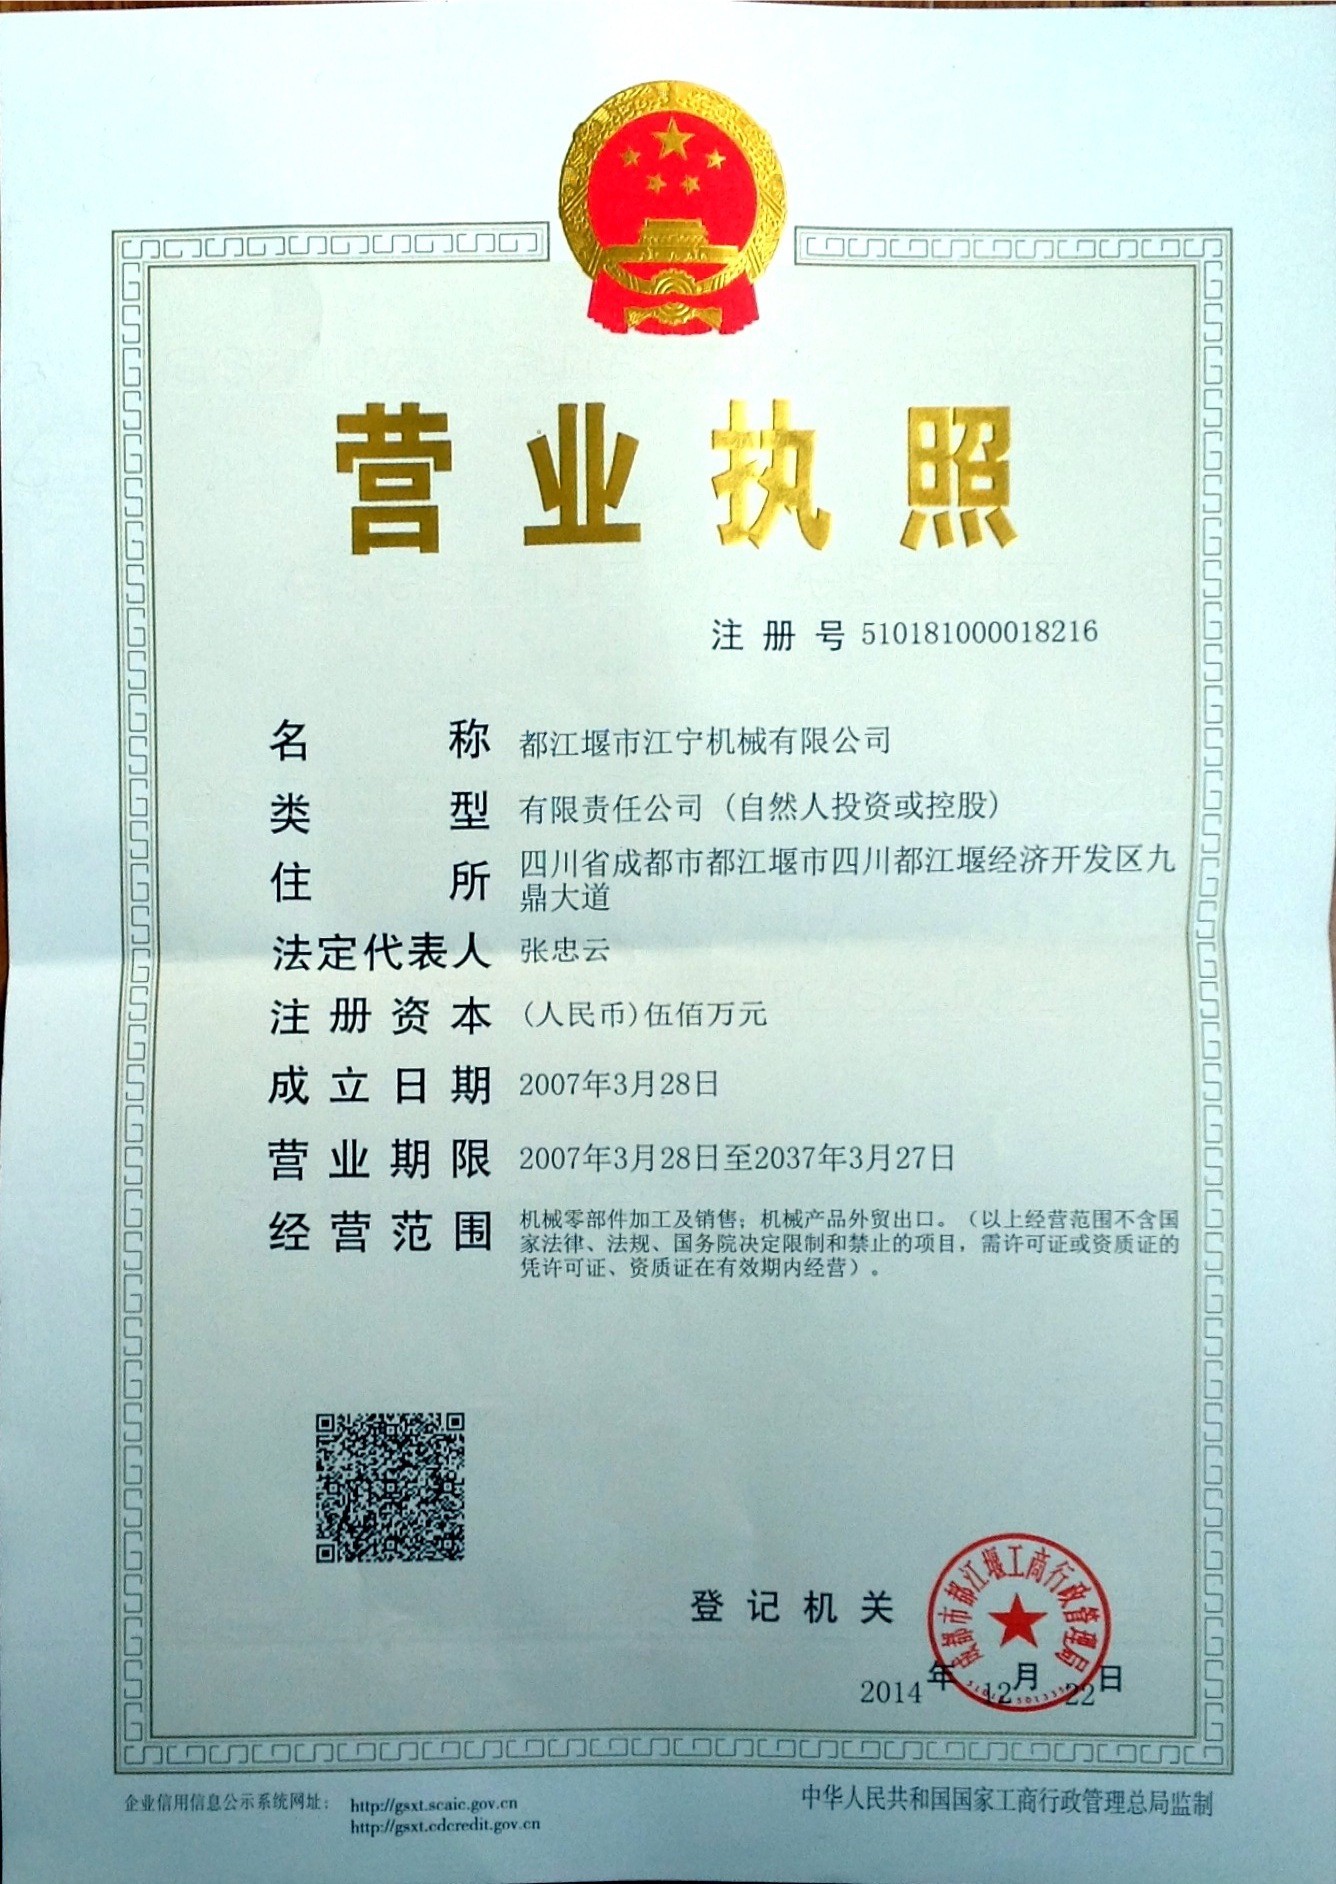 चीन Joiner Machinery Co., Ltd. प्रमाणपत्र